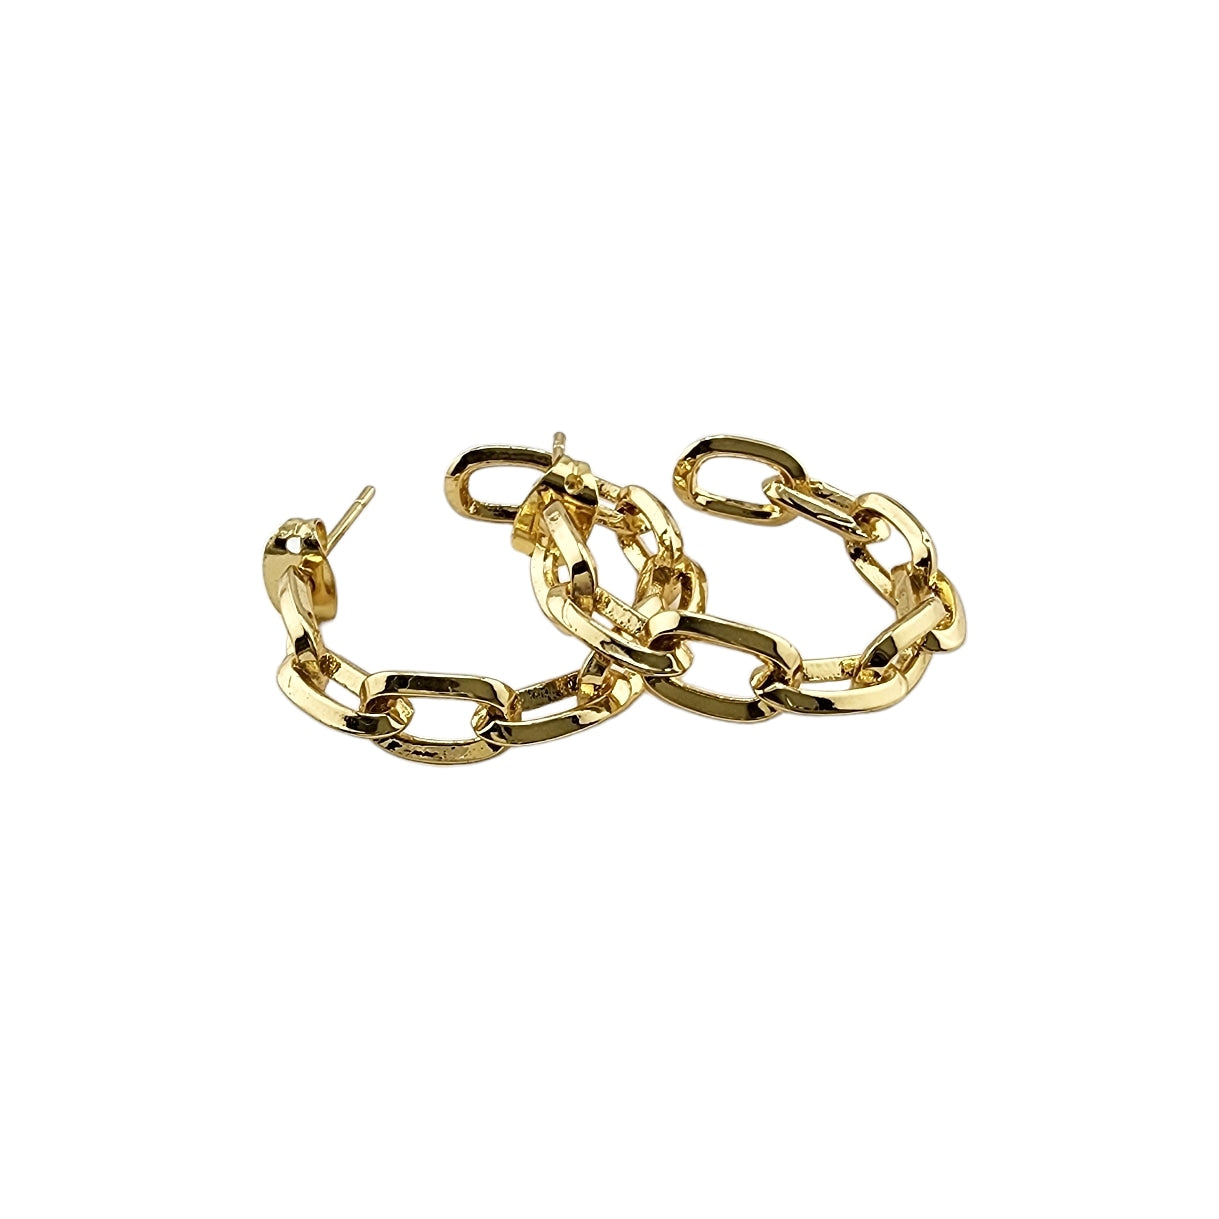 Mini Chain Hoop Earrings